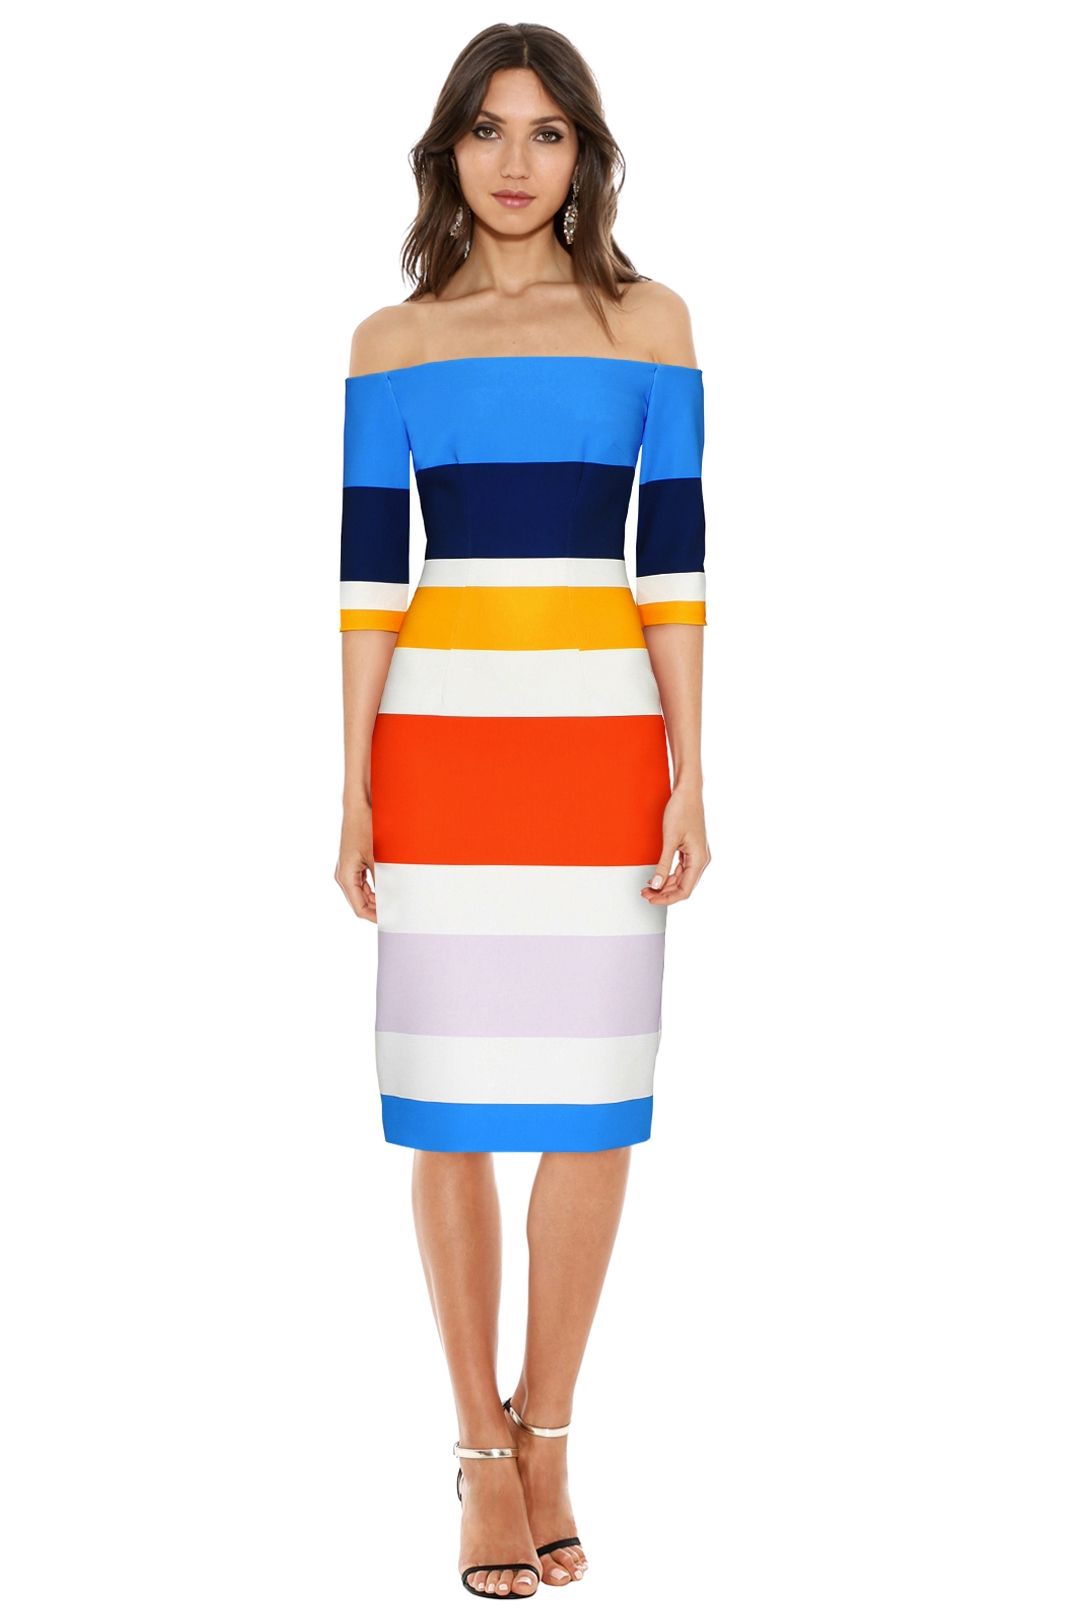 By Johnny - Bermuda Stripe Cut Off Dress - Multicolour - Front